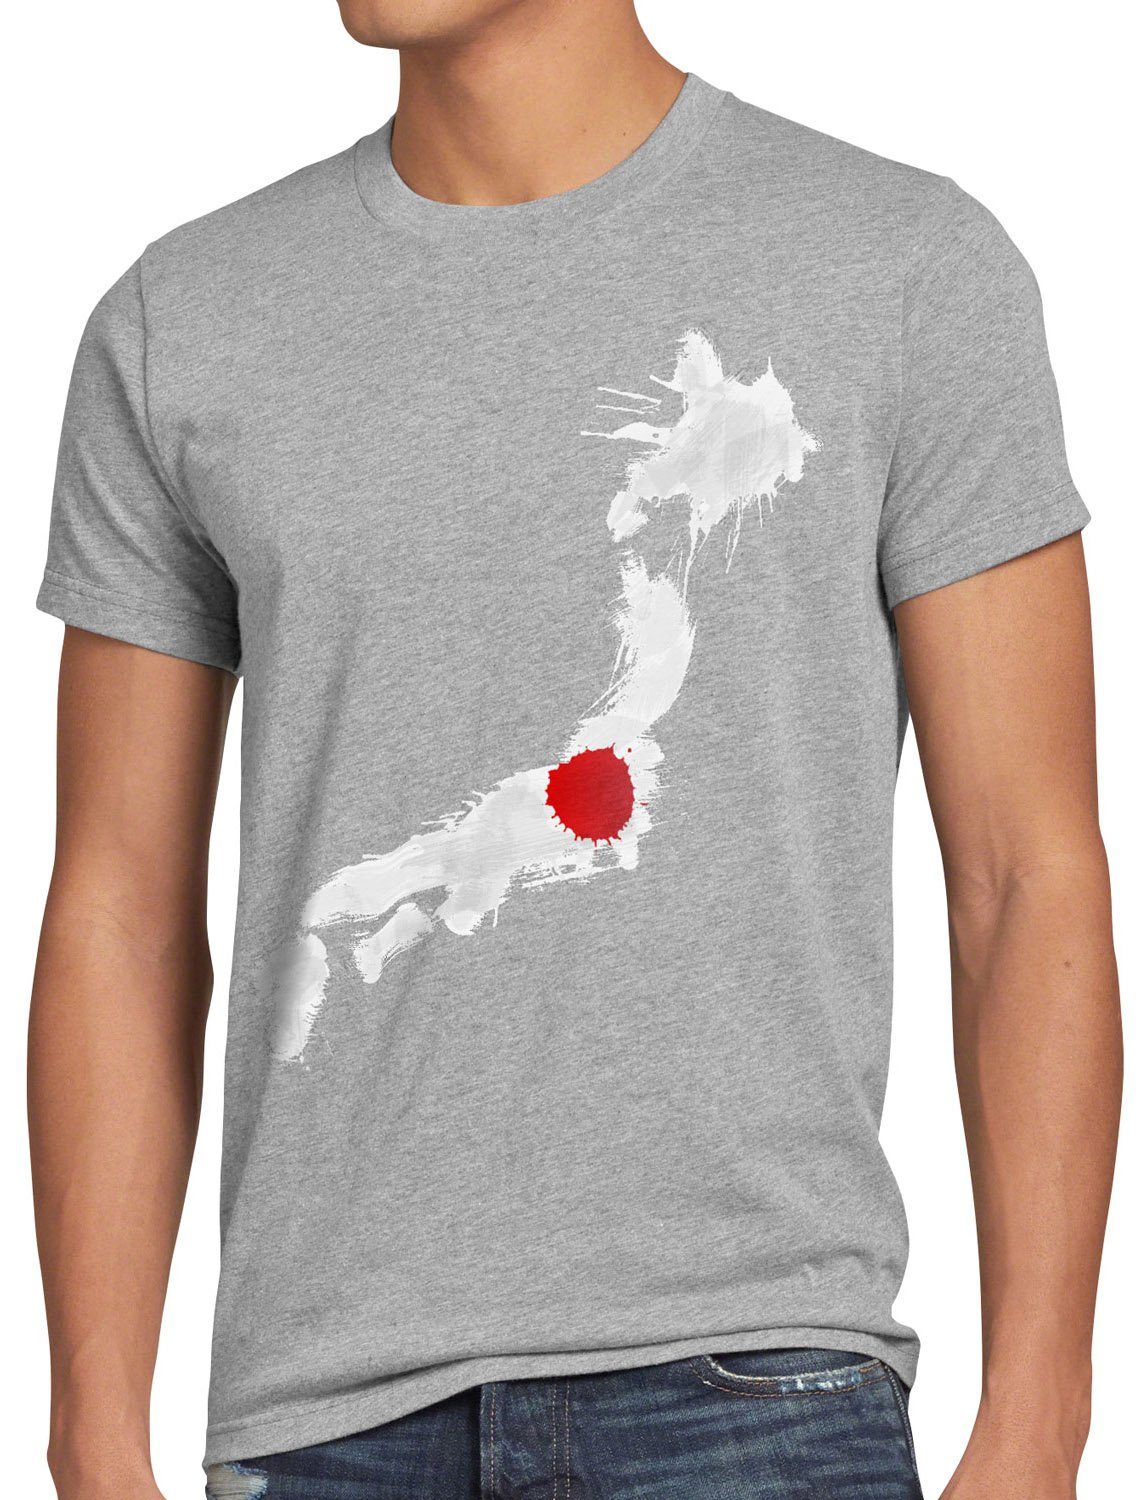 style3 Print-Shirt Herren T-Shirt Flagge Japan Fußball Sport Nihon WM EM Fahne grau meliert